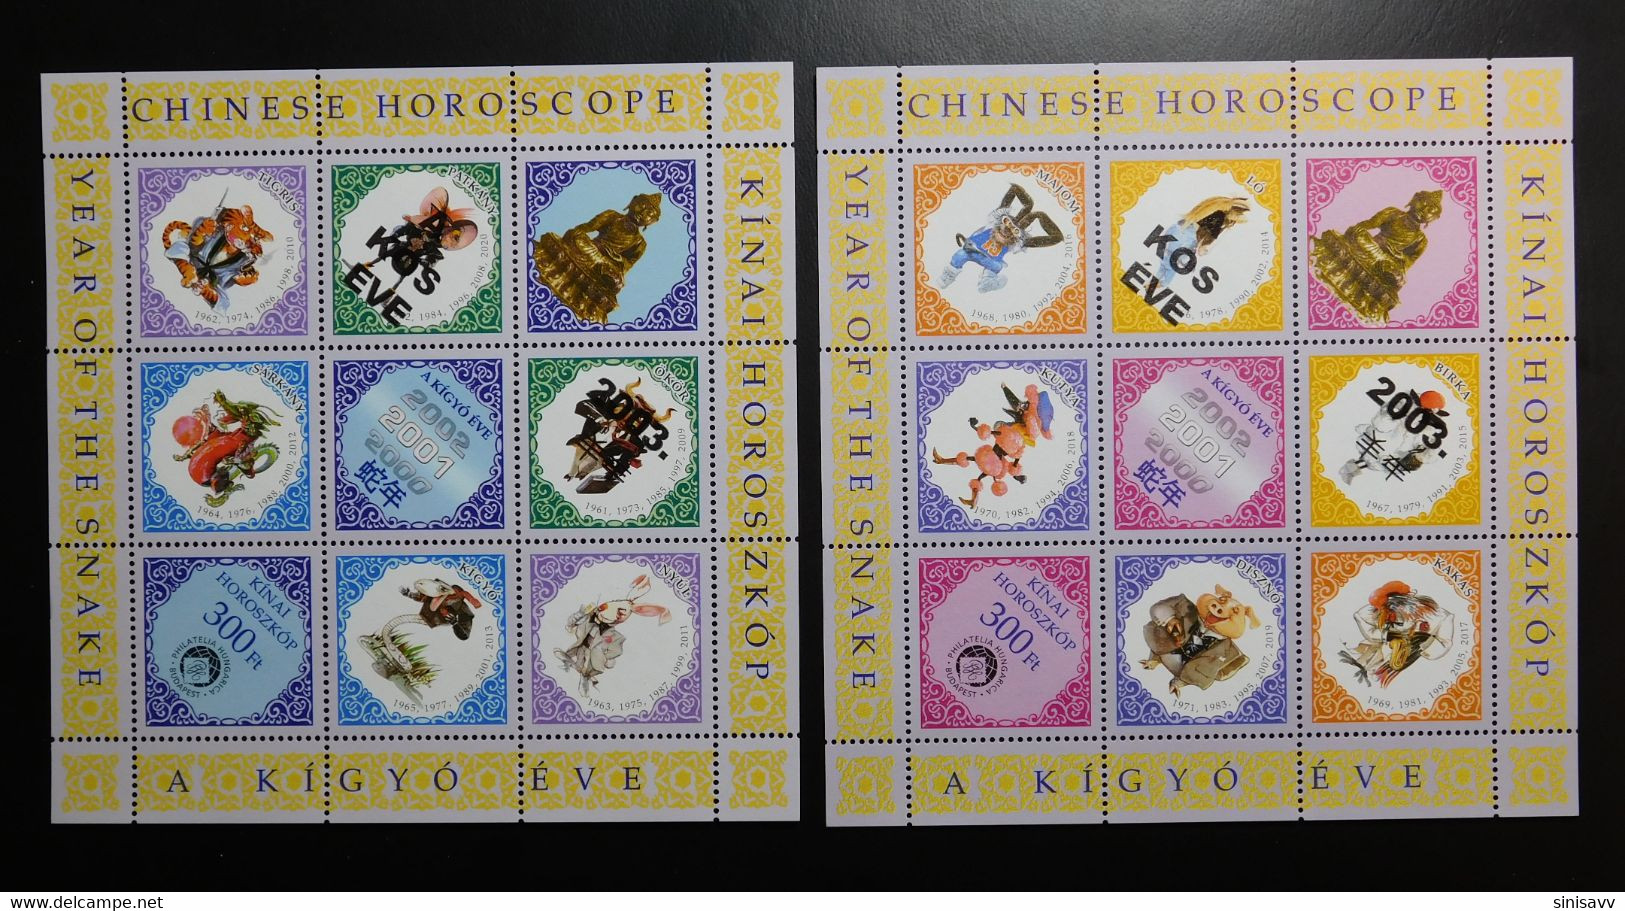 HUNGARY - 2003 - Commemorative Sheet Pair - Chinese Horoscope / Year Of The Ram MNH! - Herdenkingsblaadjes